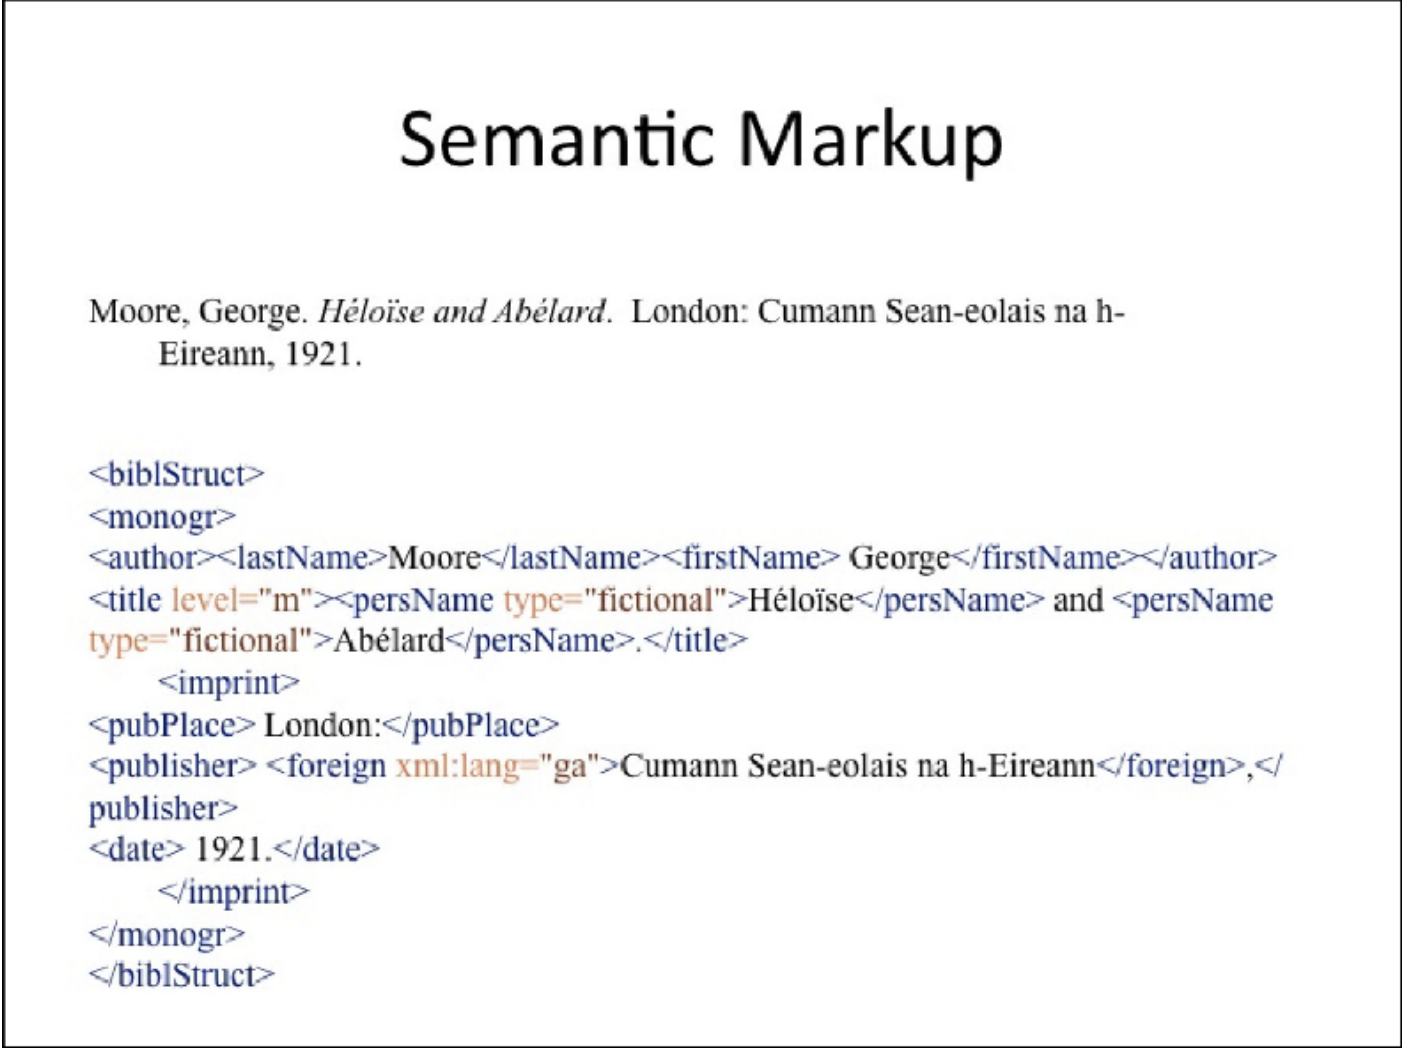 Image showing Semantic Markup.